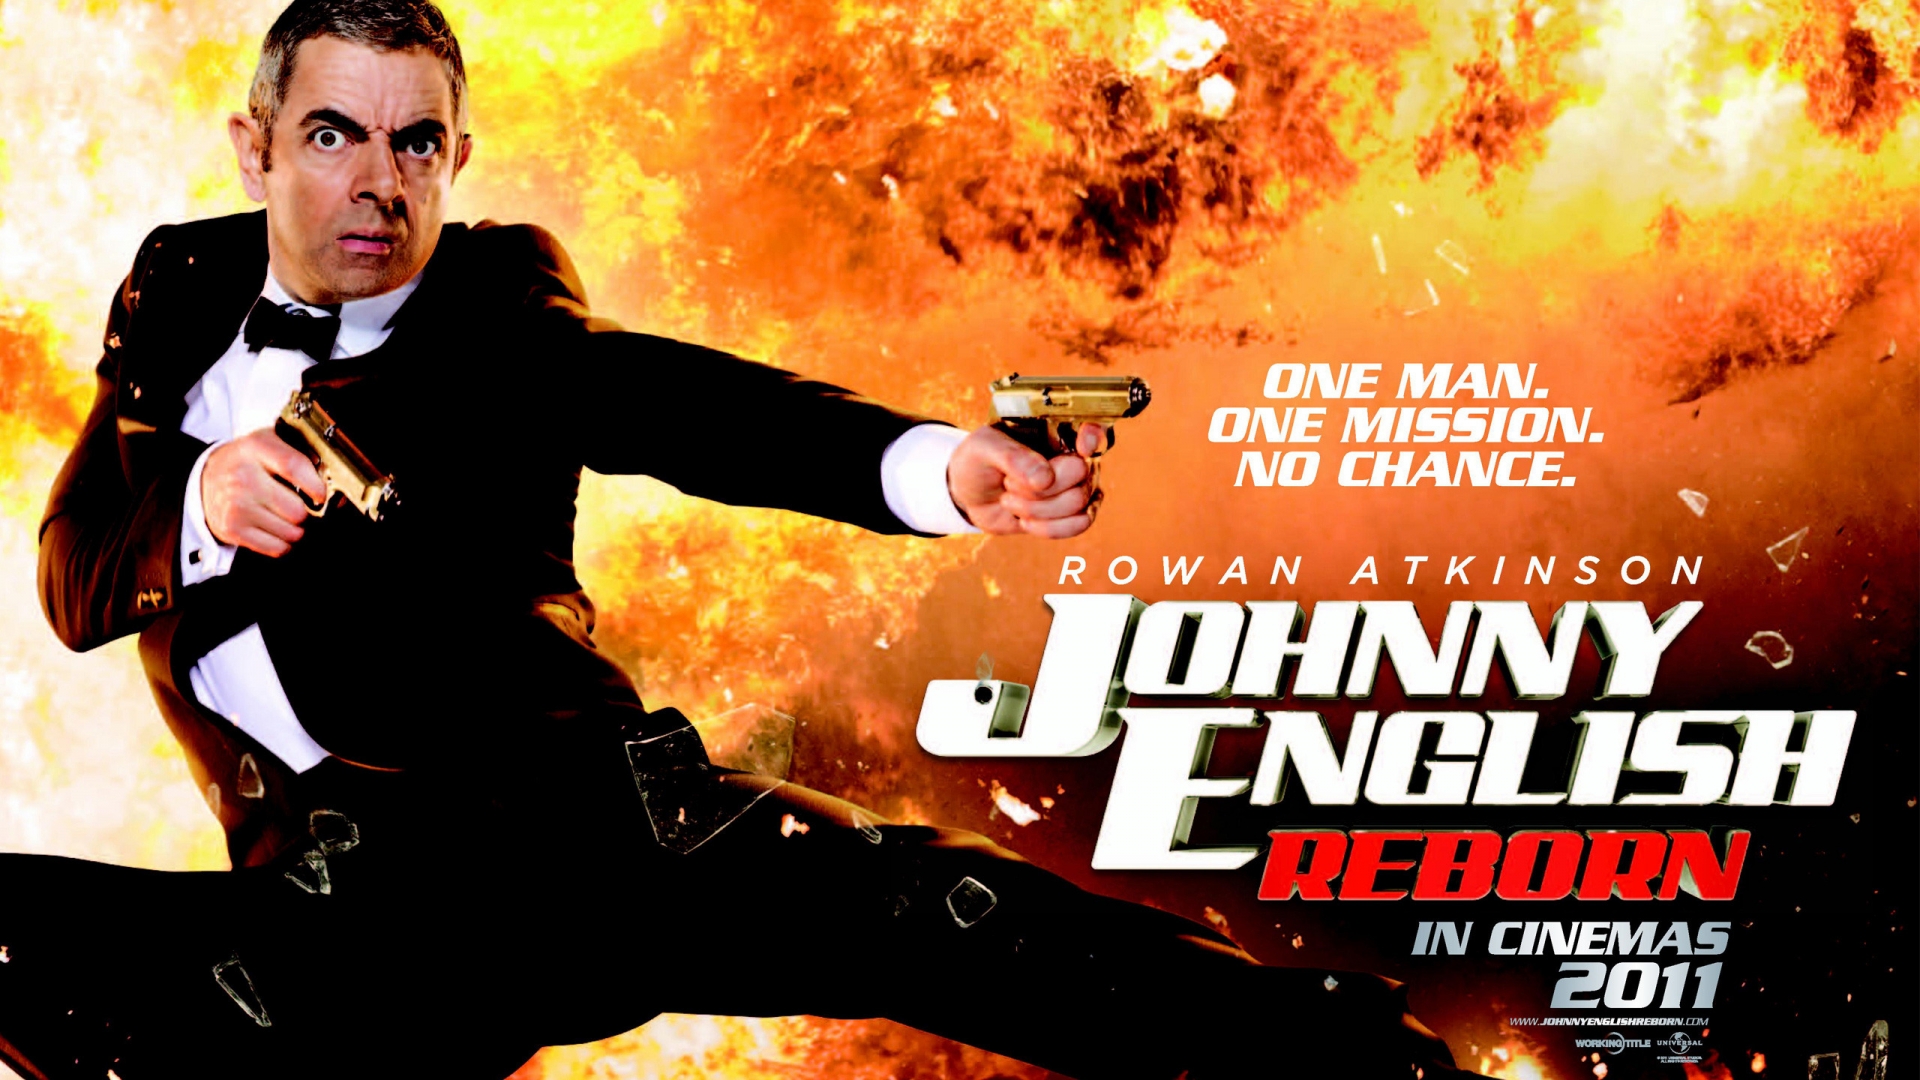 Johnny English Reborn for 1920 x 1080 HDTV 1080p resolution